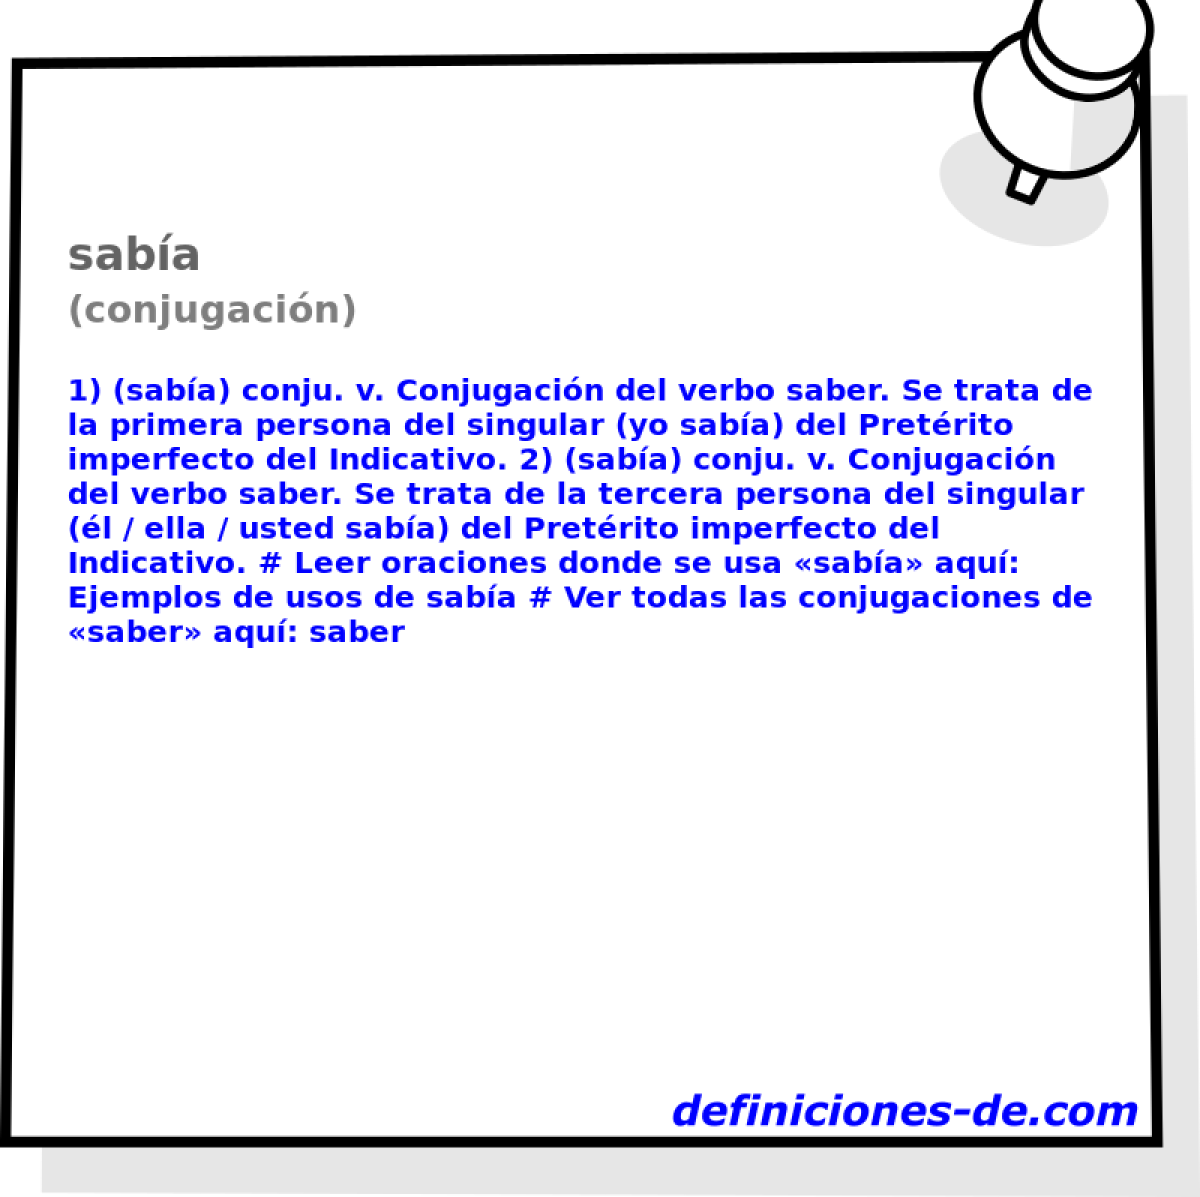 saba (conjugacin)